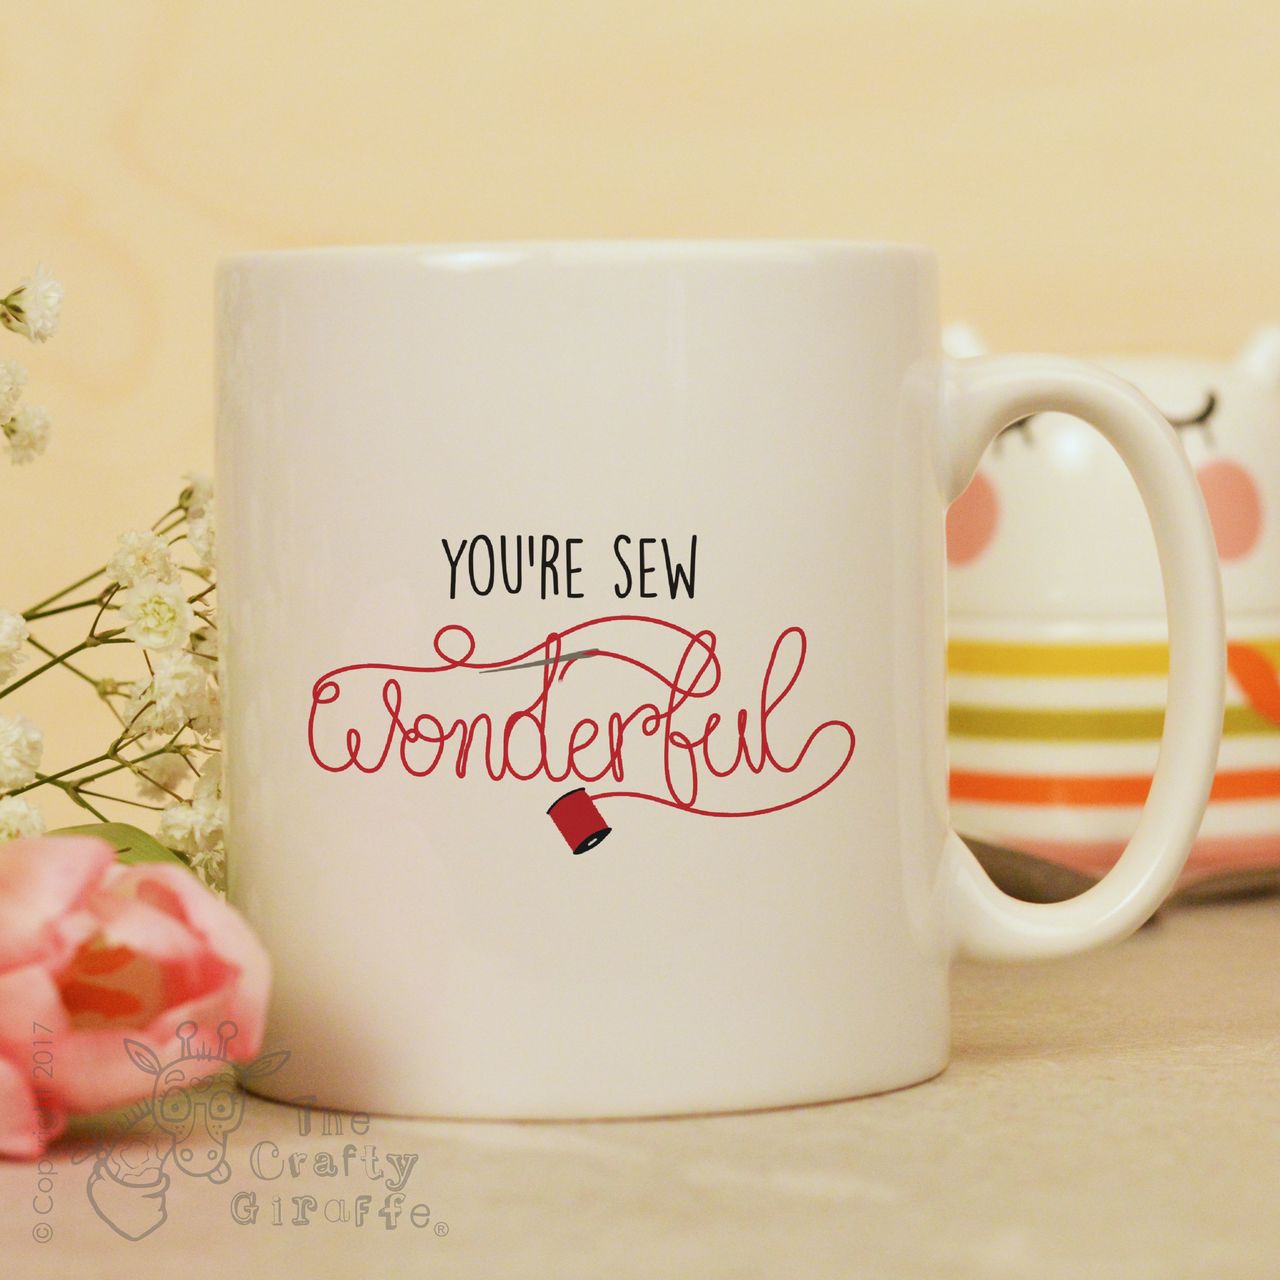 You’re sew wonderful mug